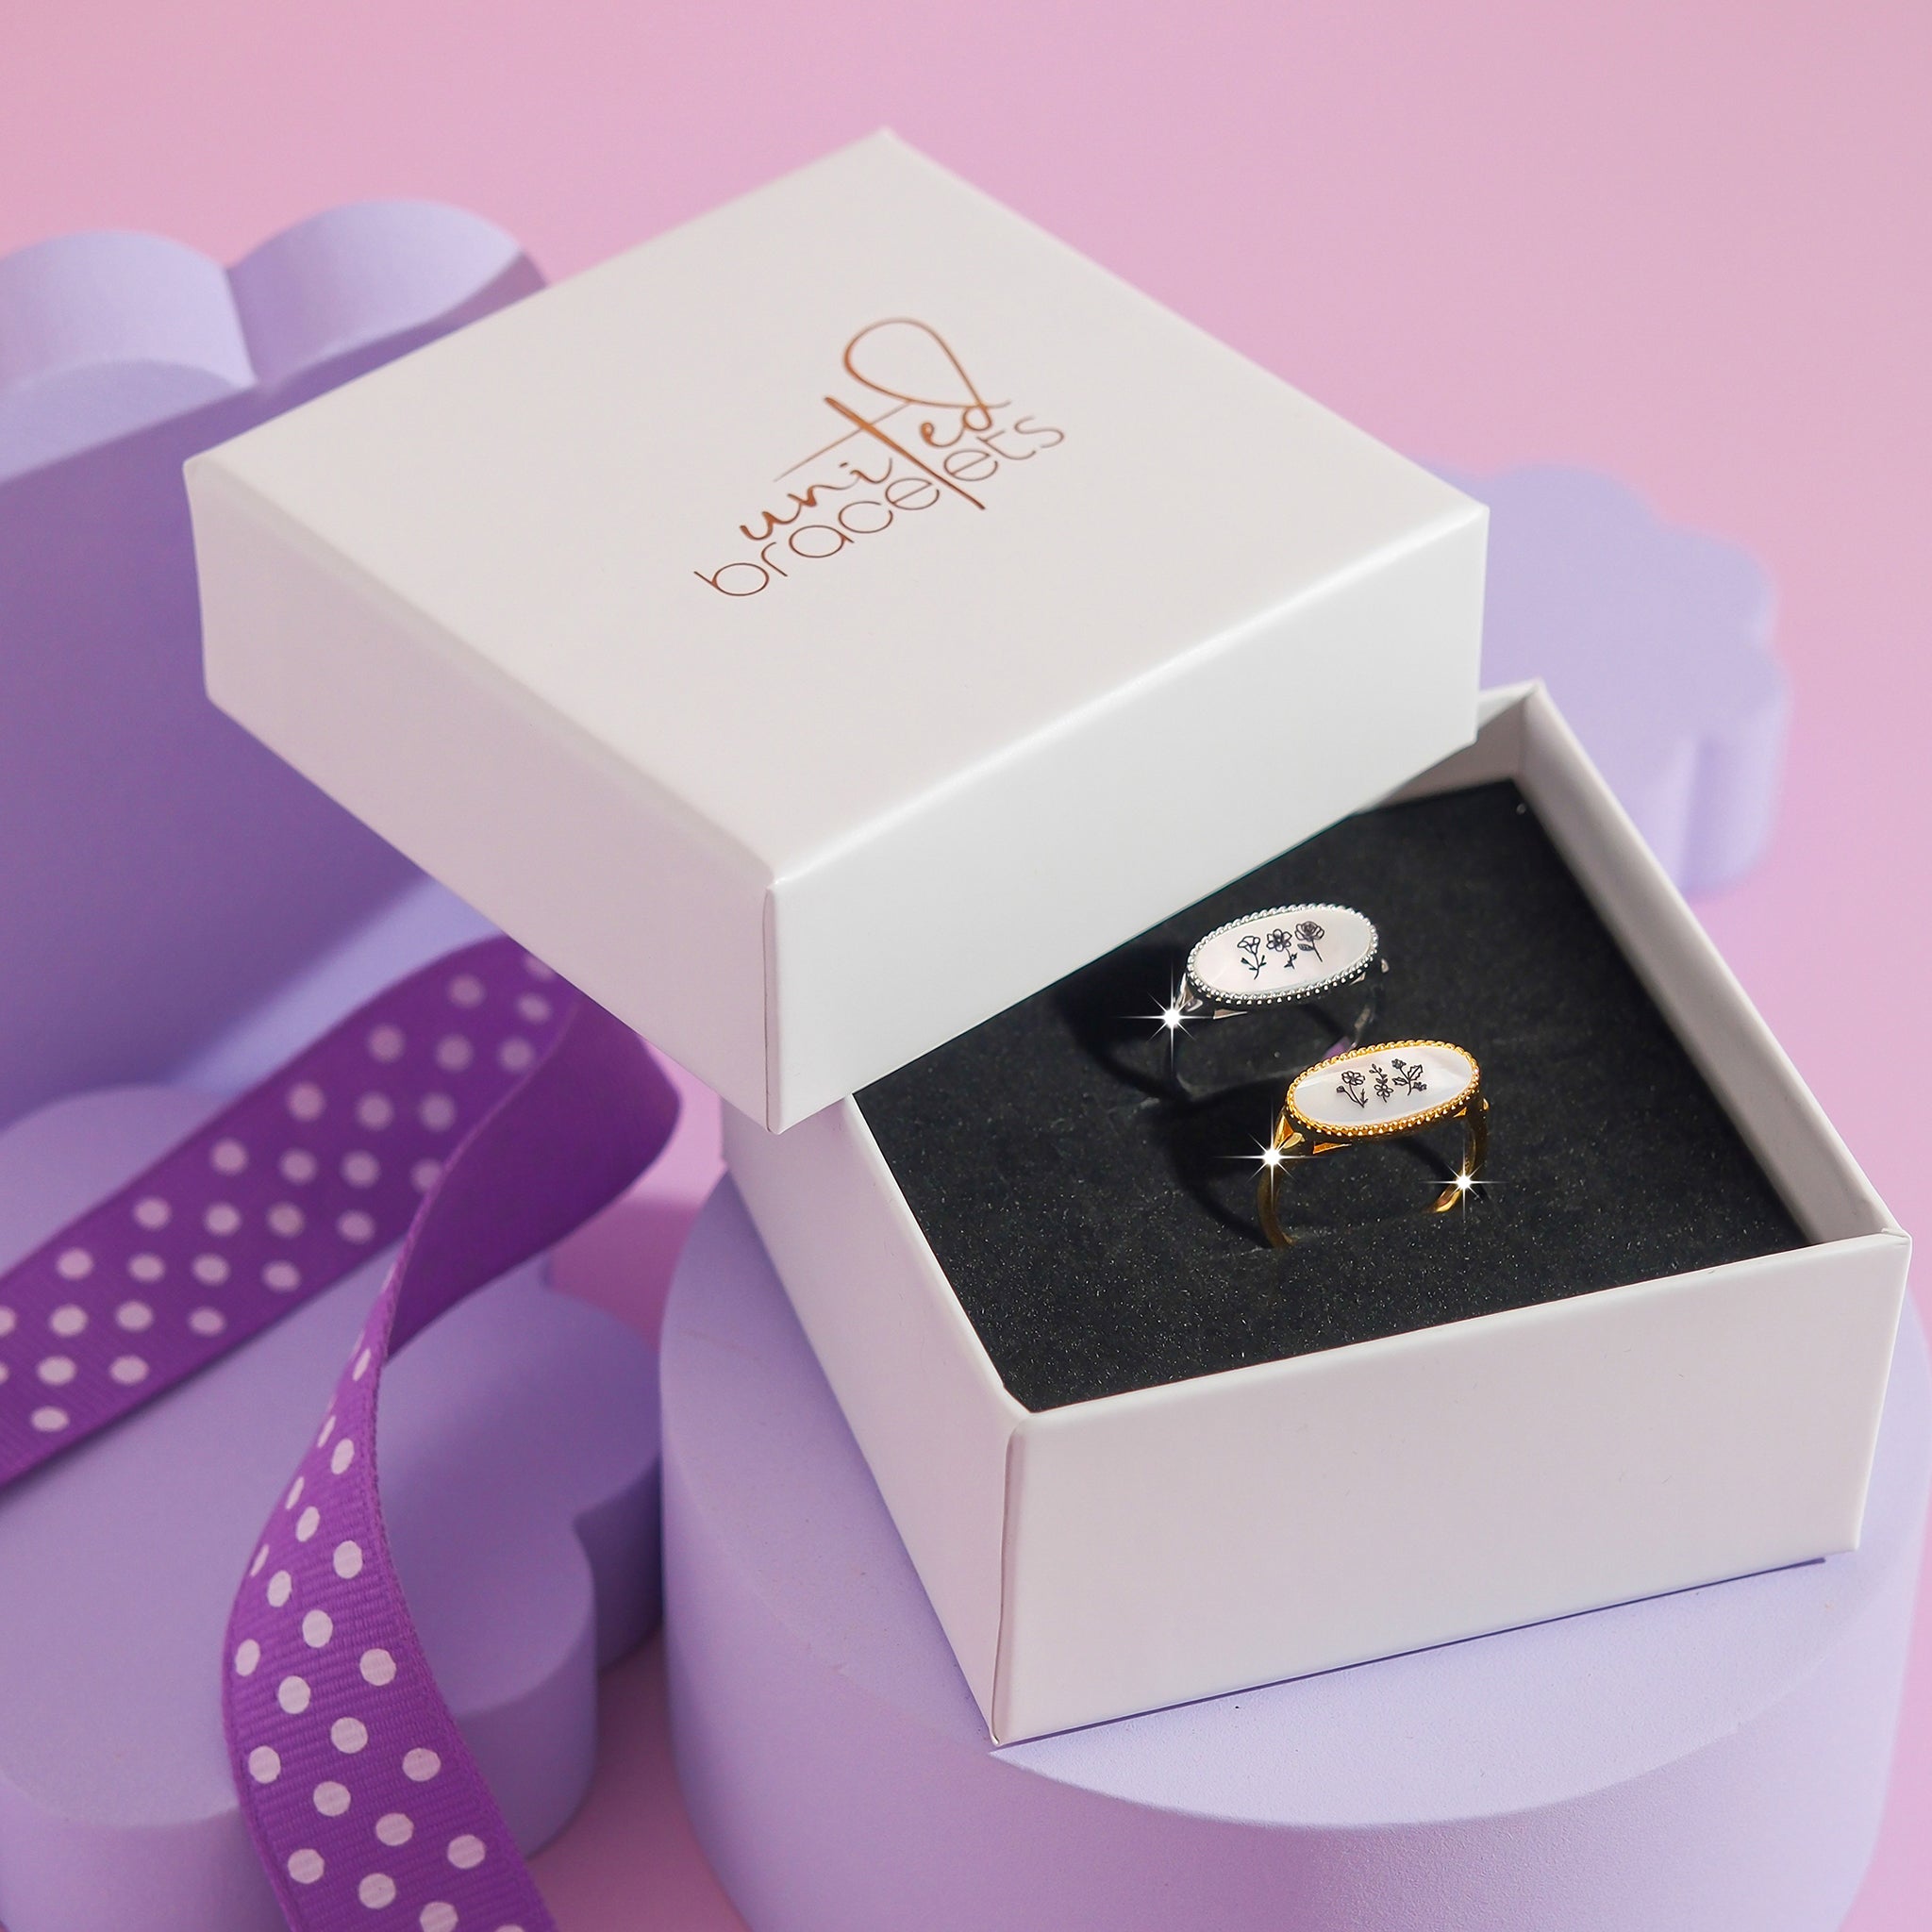 Personalised Gifts - Necklaces, Bracelets & More | United Bracelets